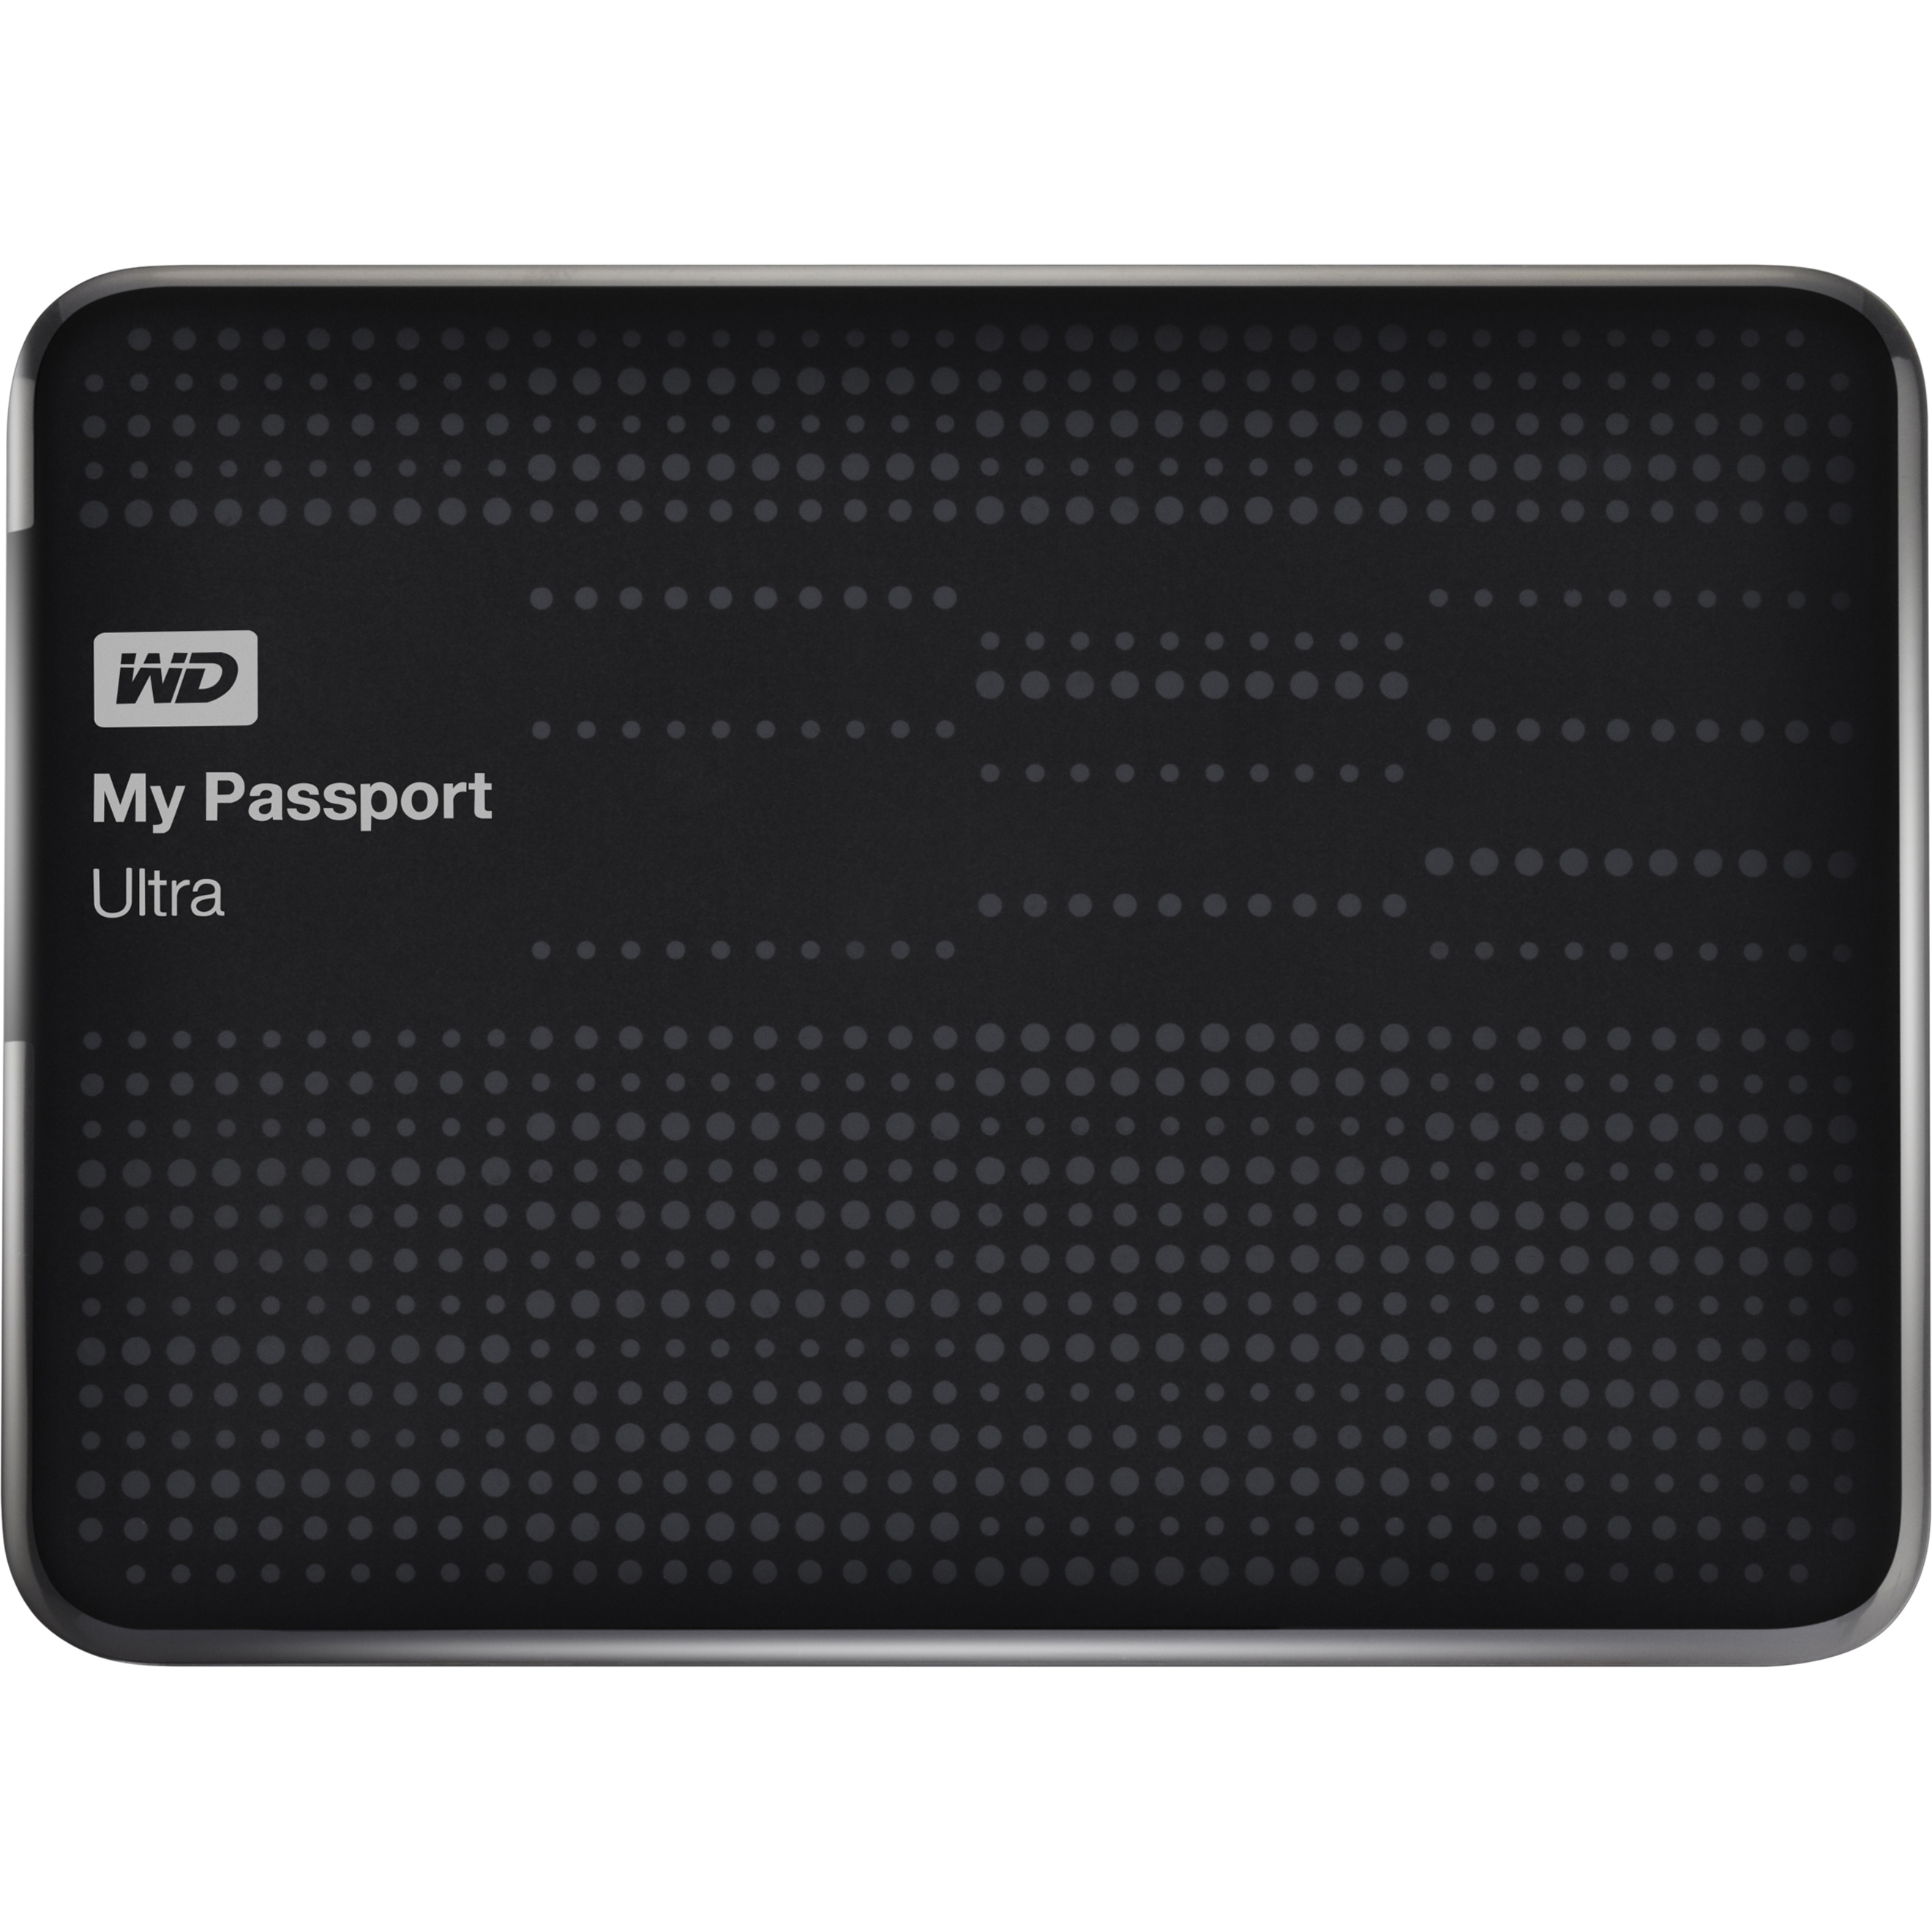 WD My Passport Ultra WDBPGC5000ABK-NESN 500 GB Portable Hard Drive, External, Black - image 1 of 9